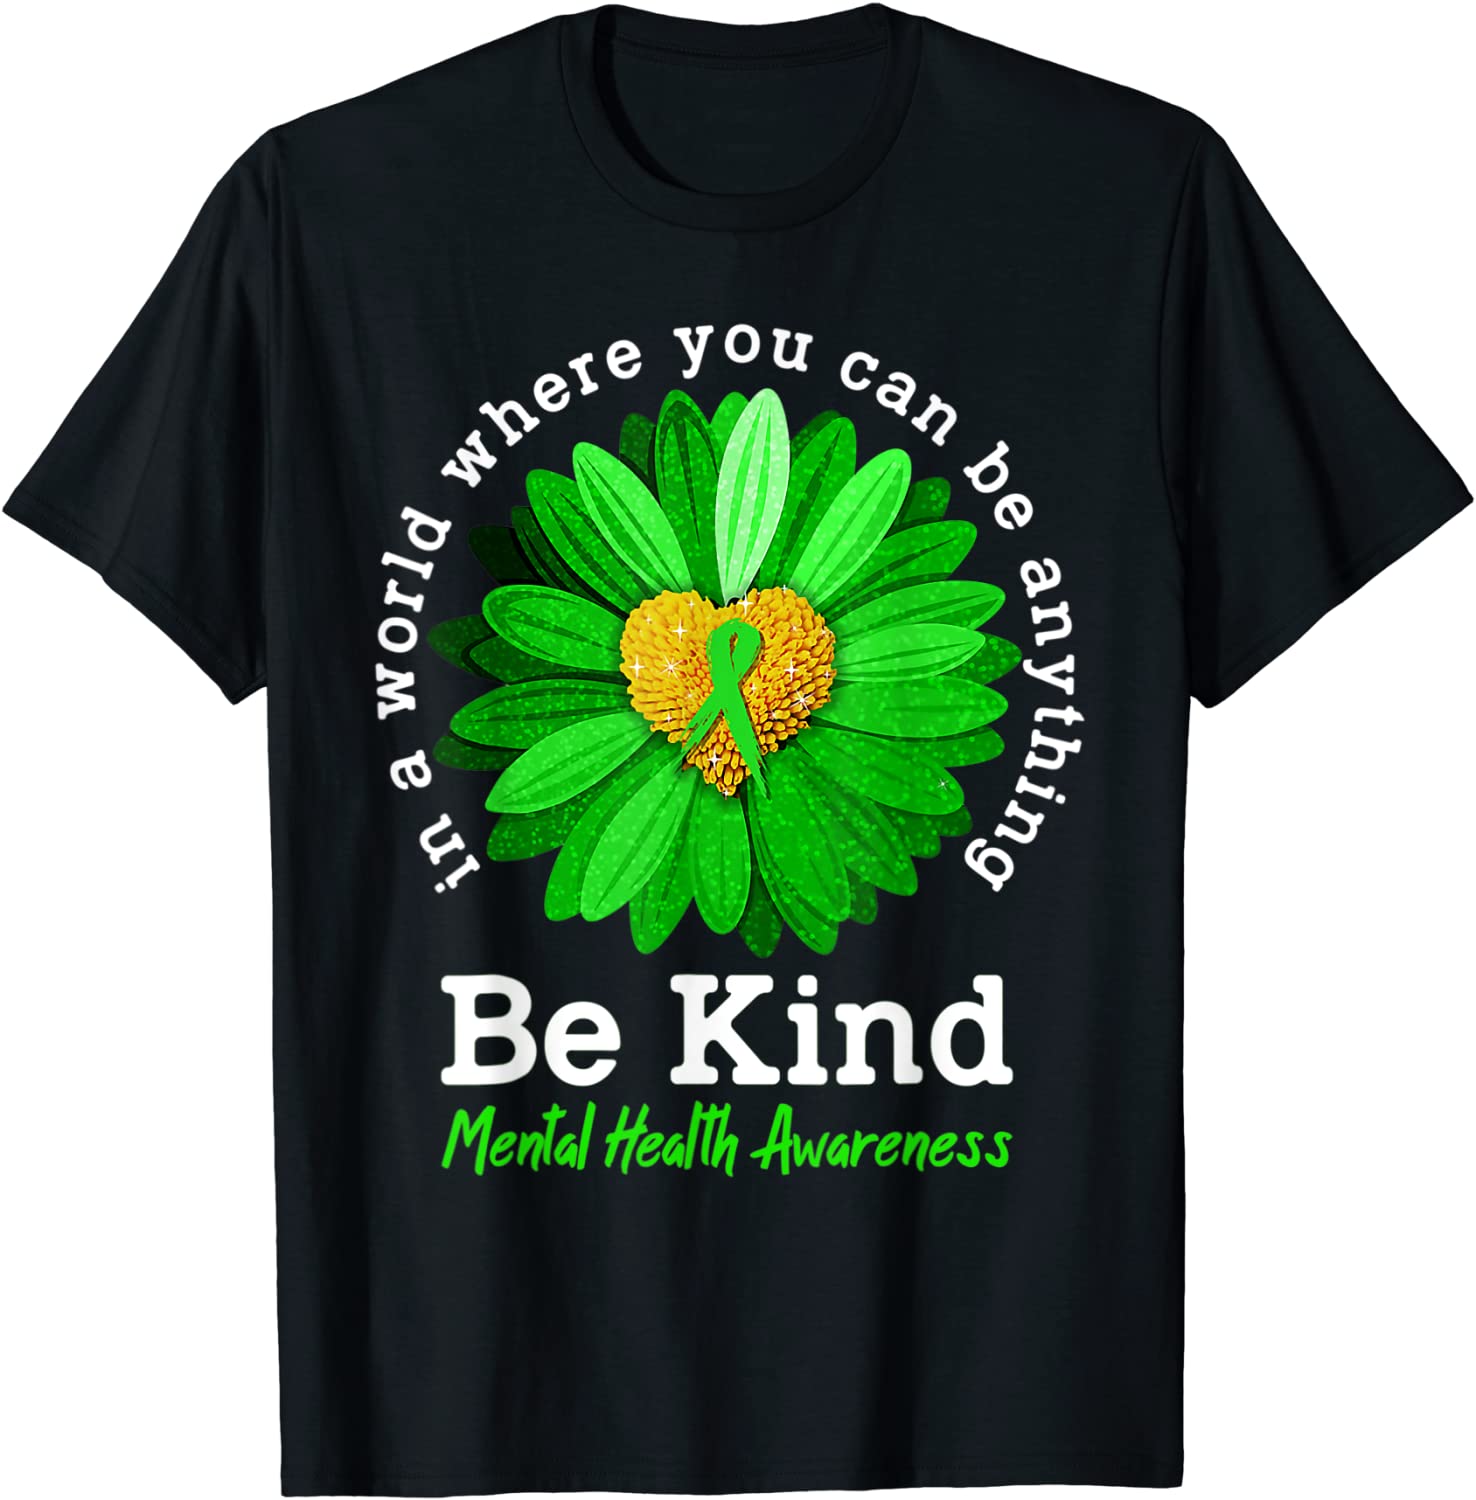 Be Kind Green Ribbon Sunflower Mental Health Awareness Tee Shirt ...